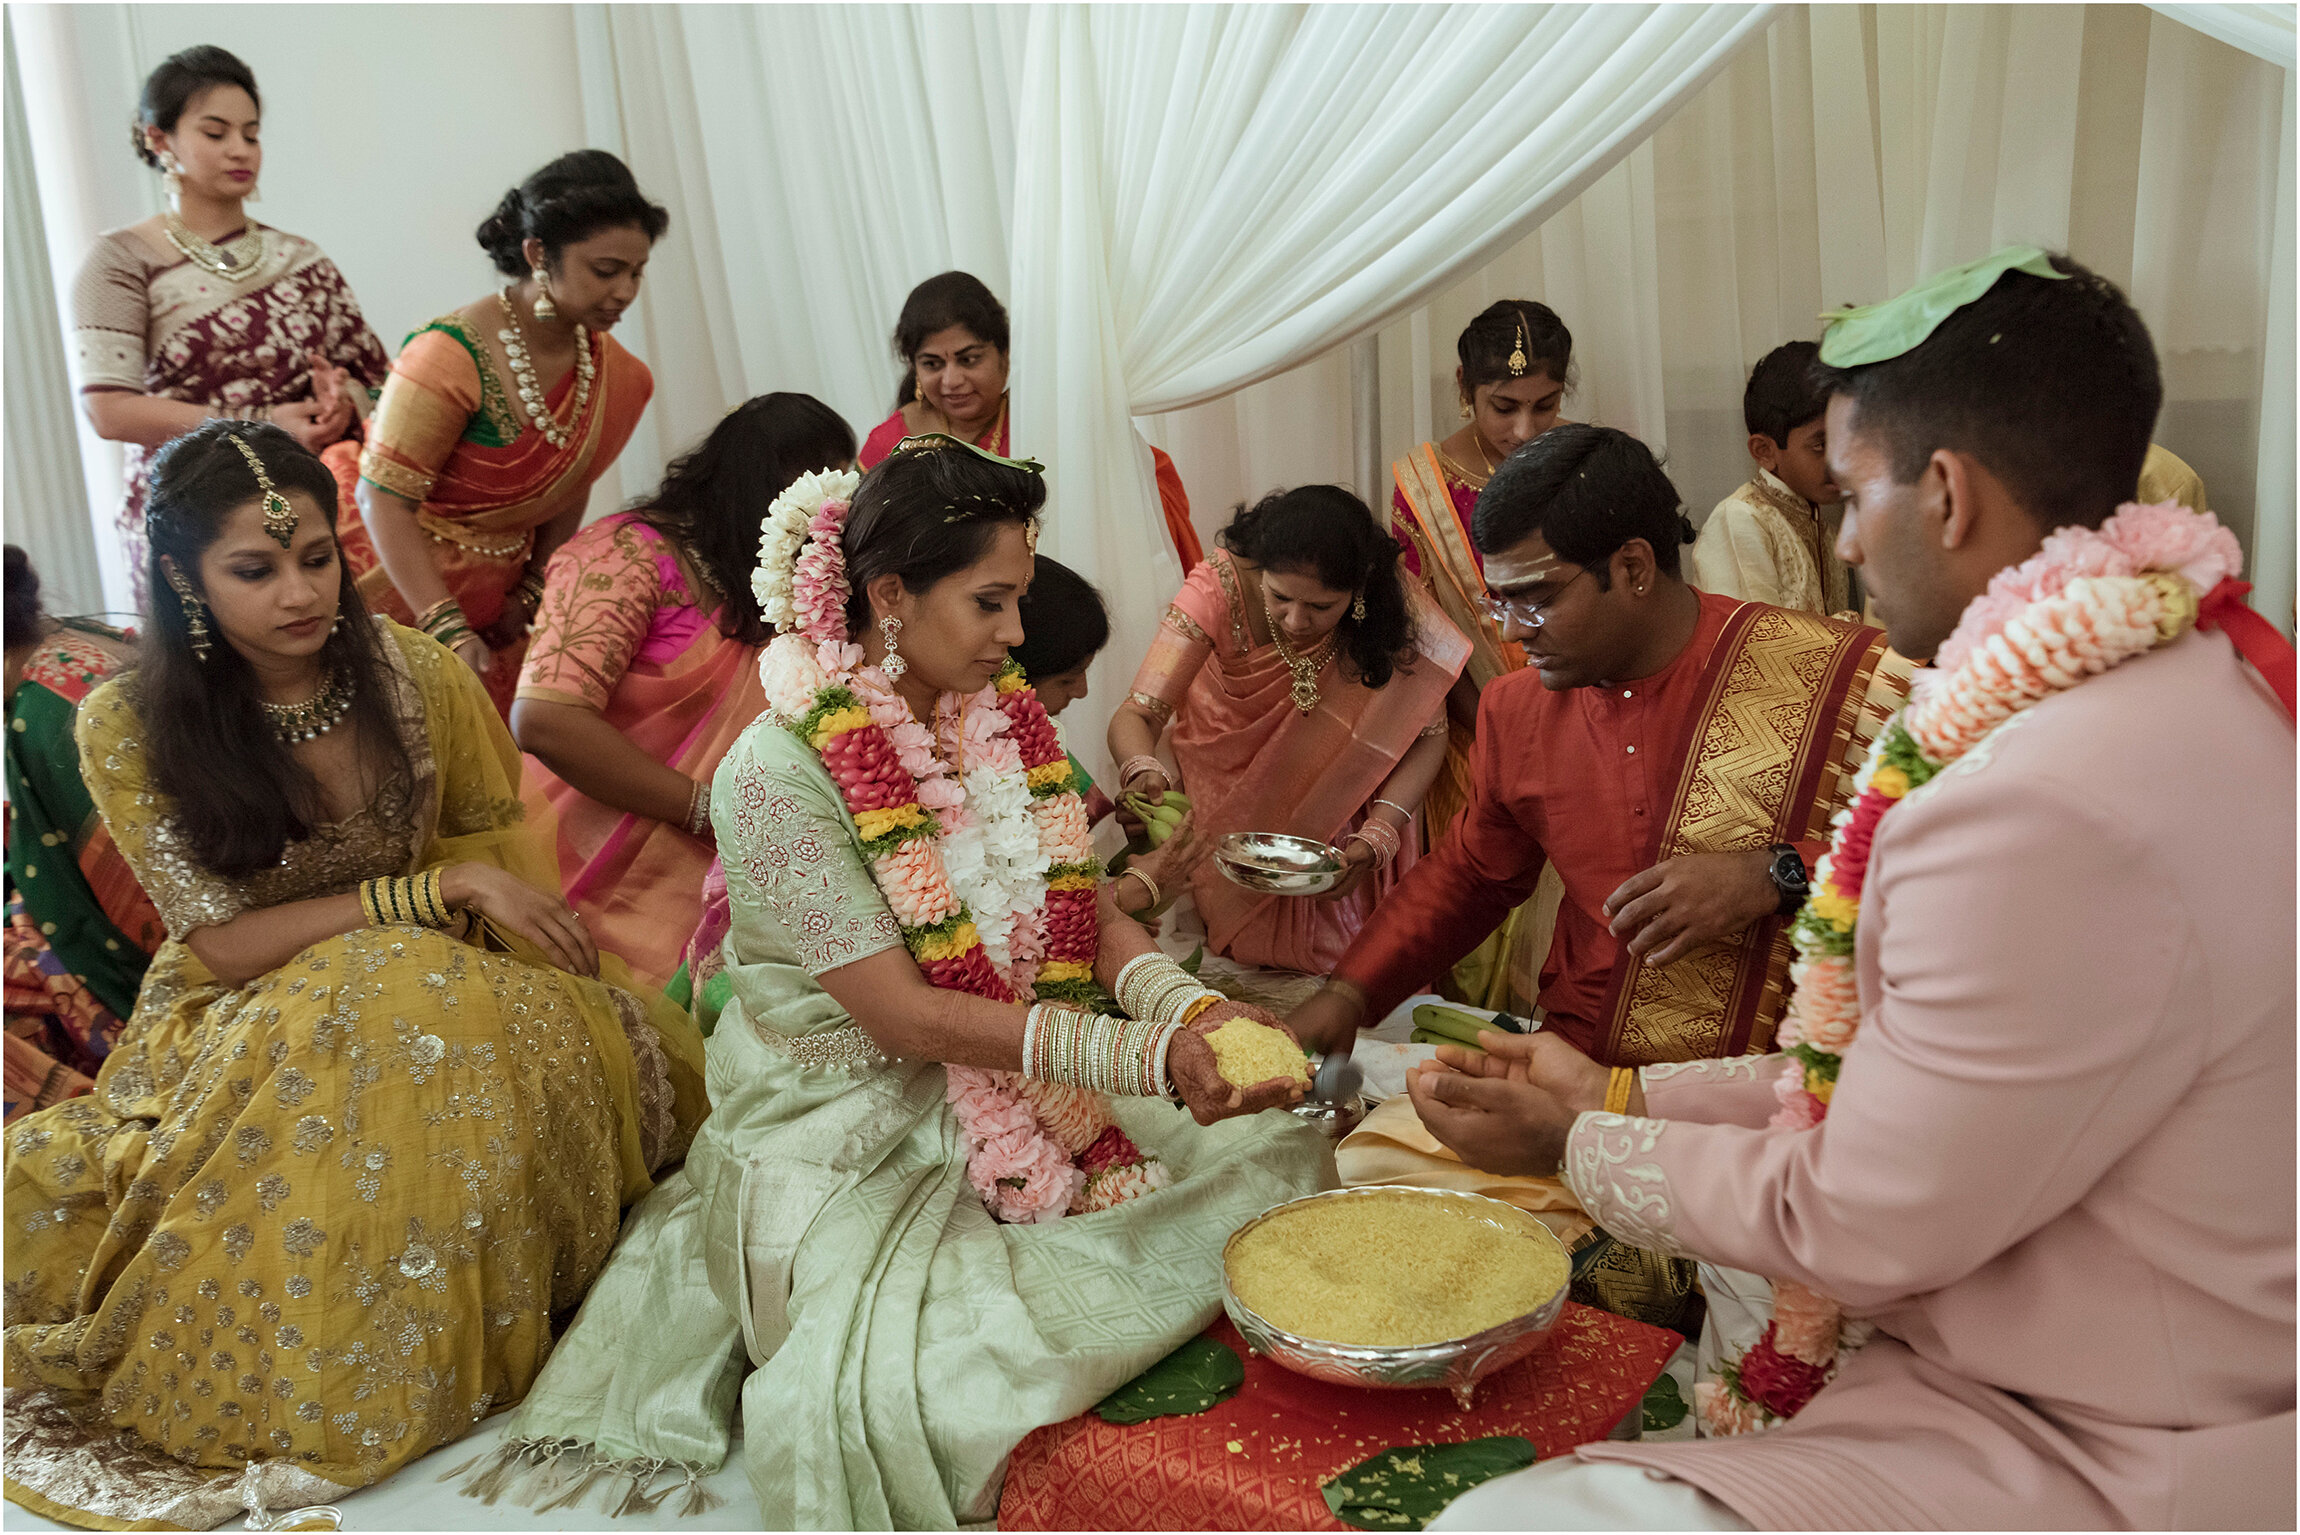 ©FianderFoto_Hindu Wedding_Bermuda_063.jpg